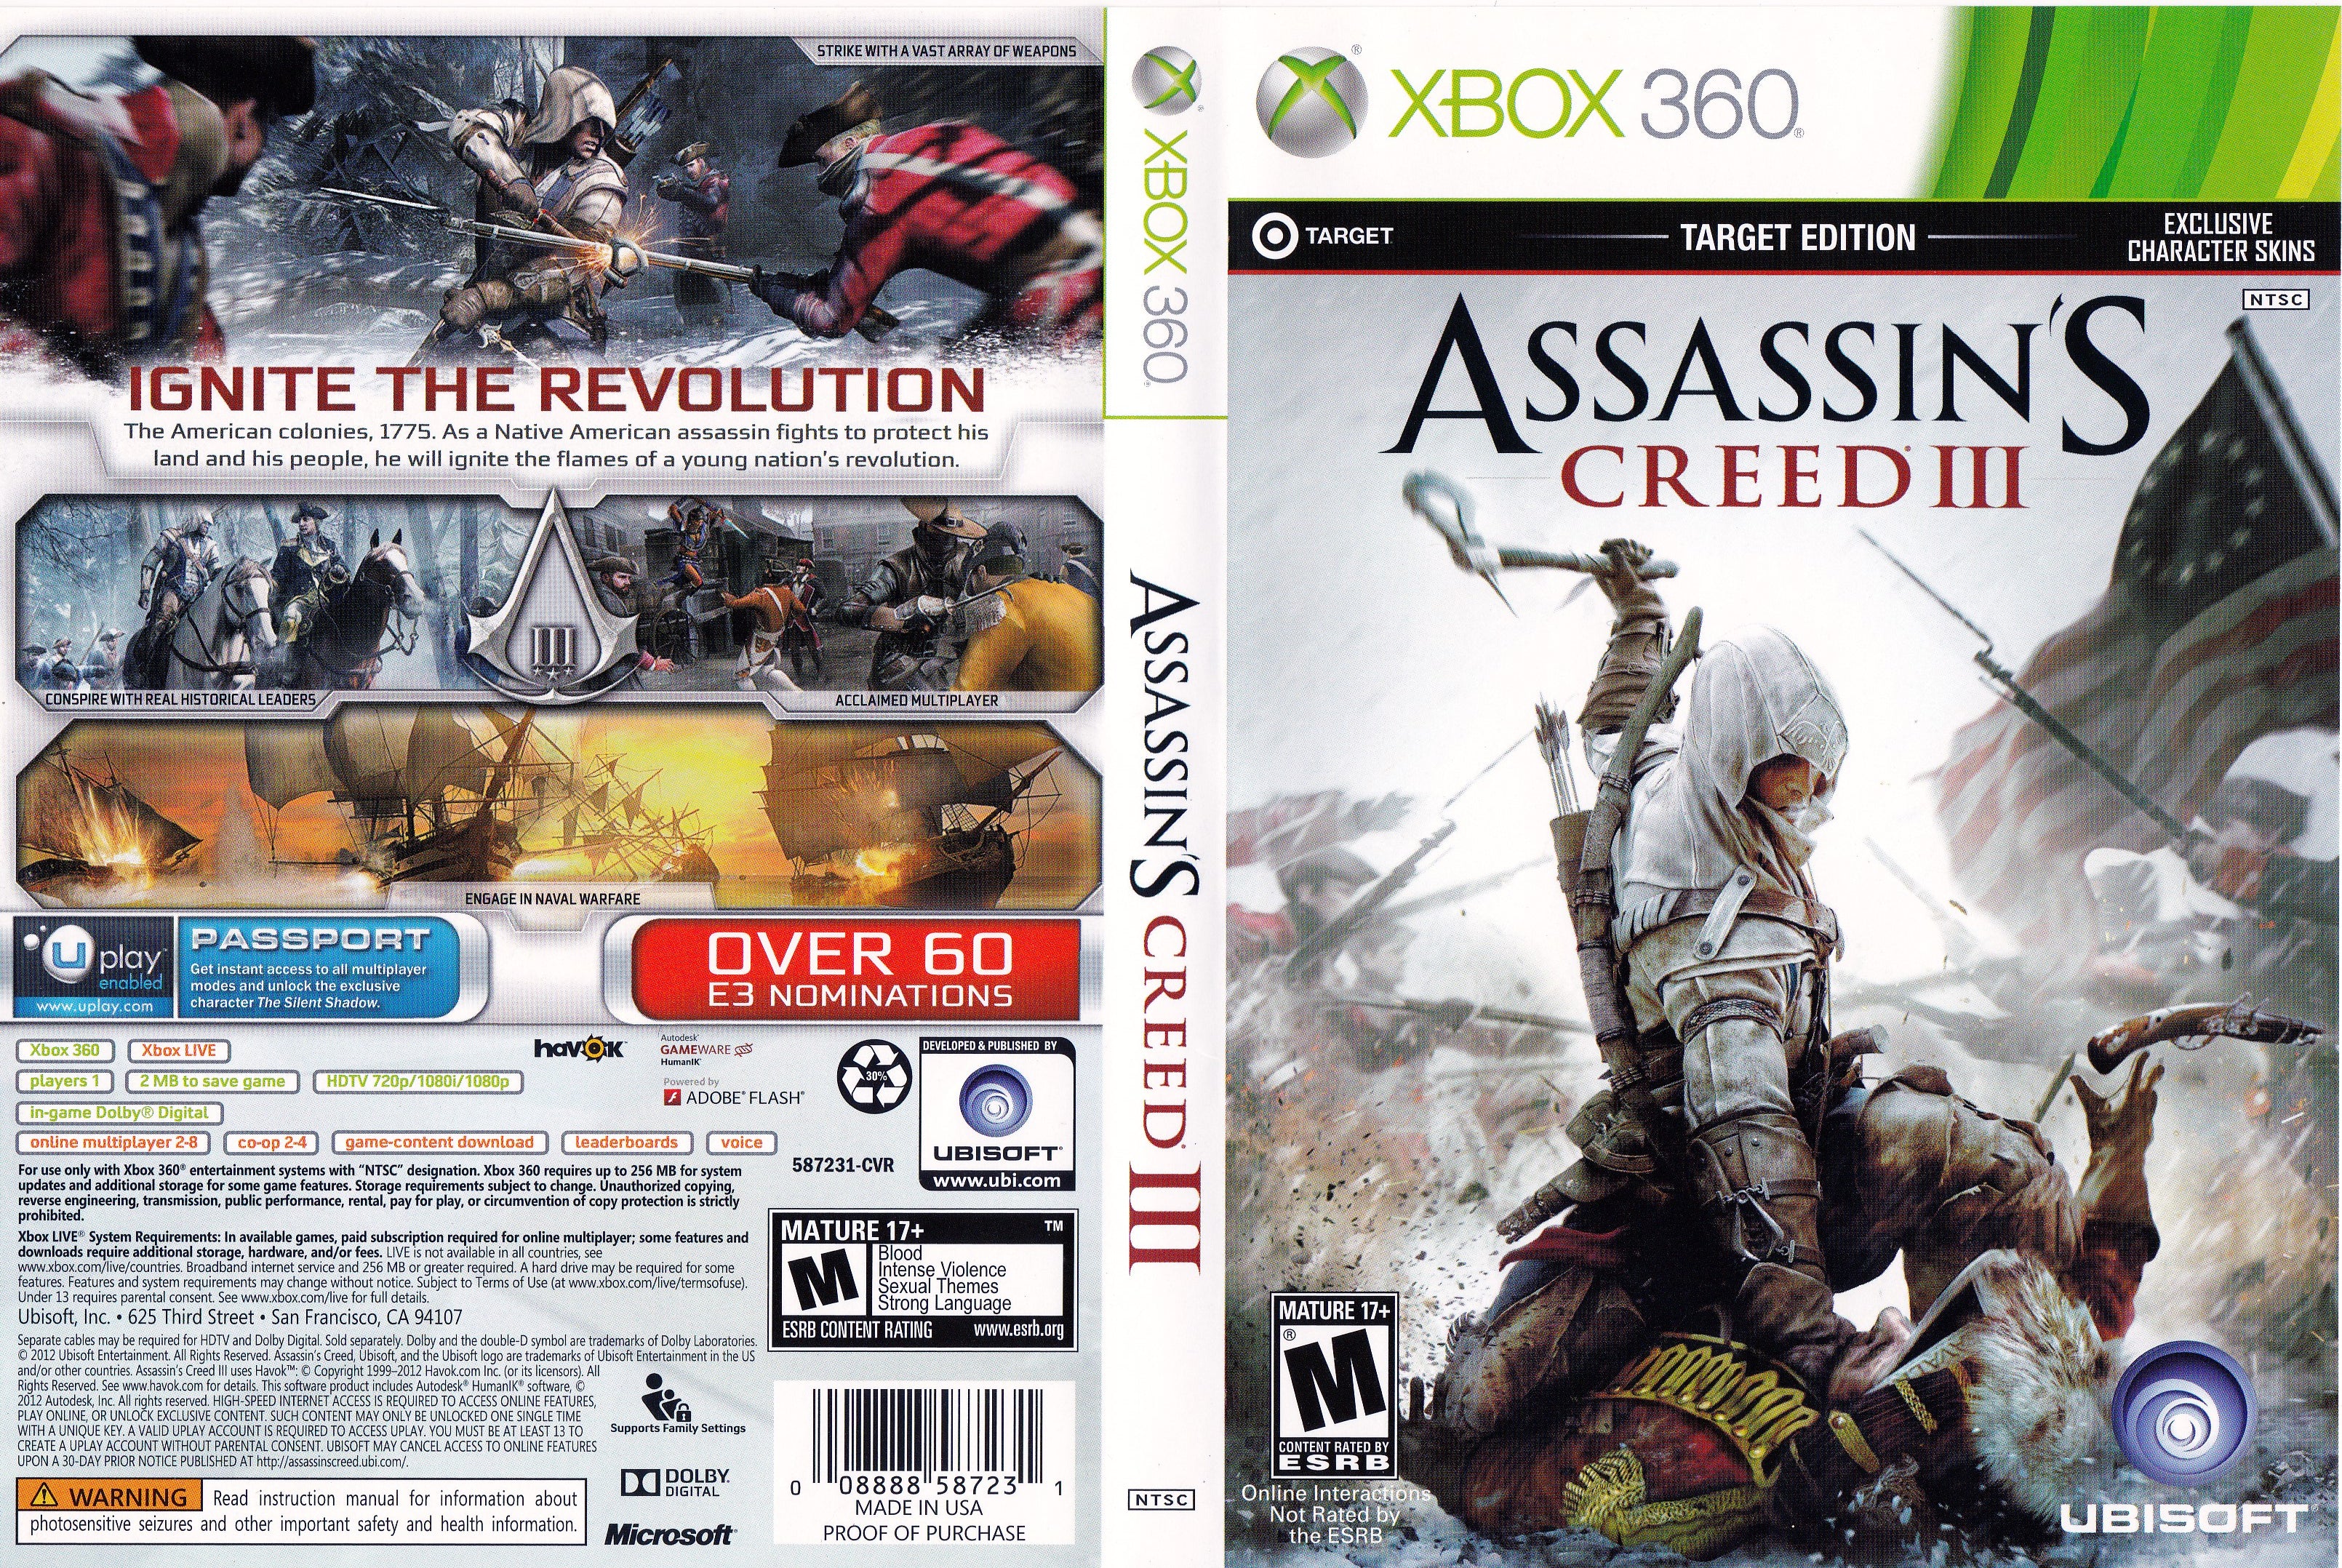 Assassin's Creed II: Platinum Hits Edition